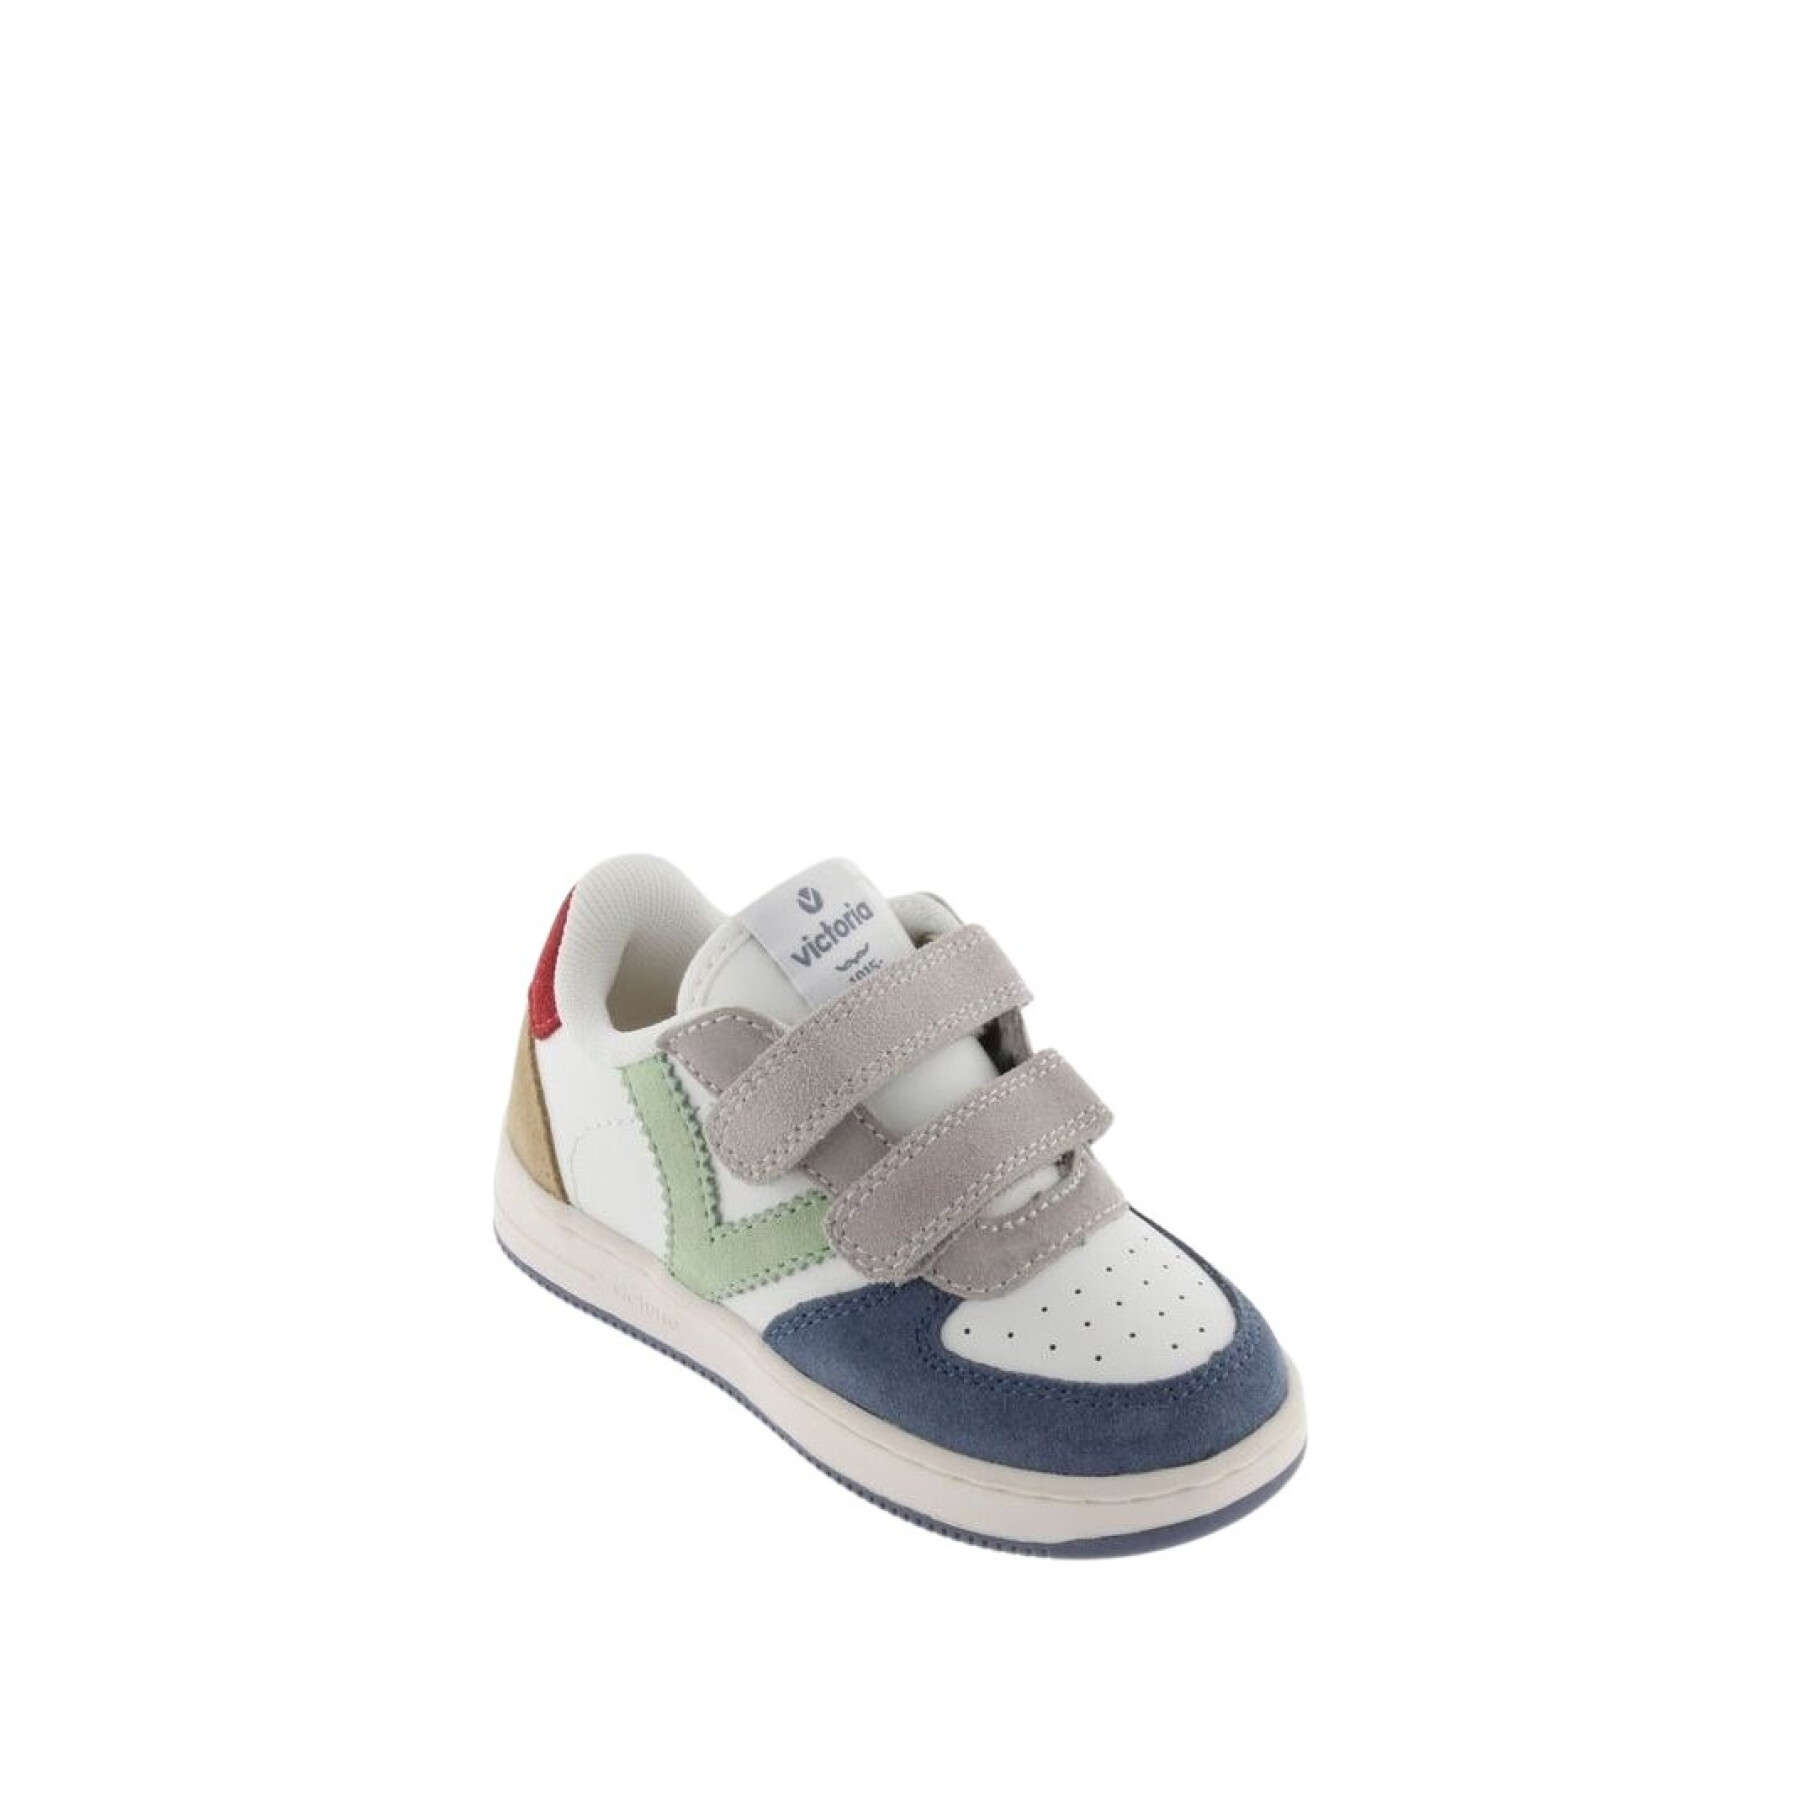 Baby girl sneakers Victoria